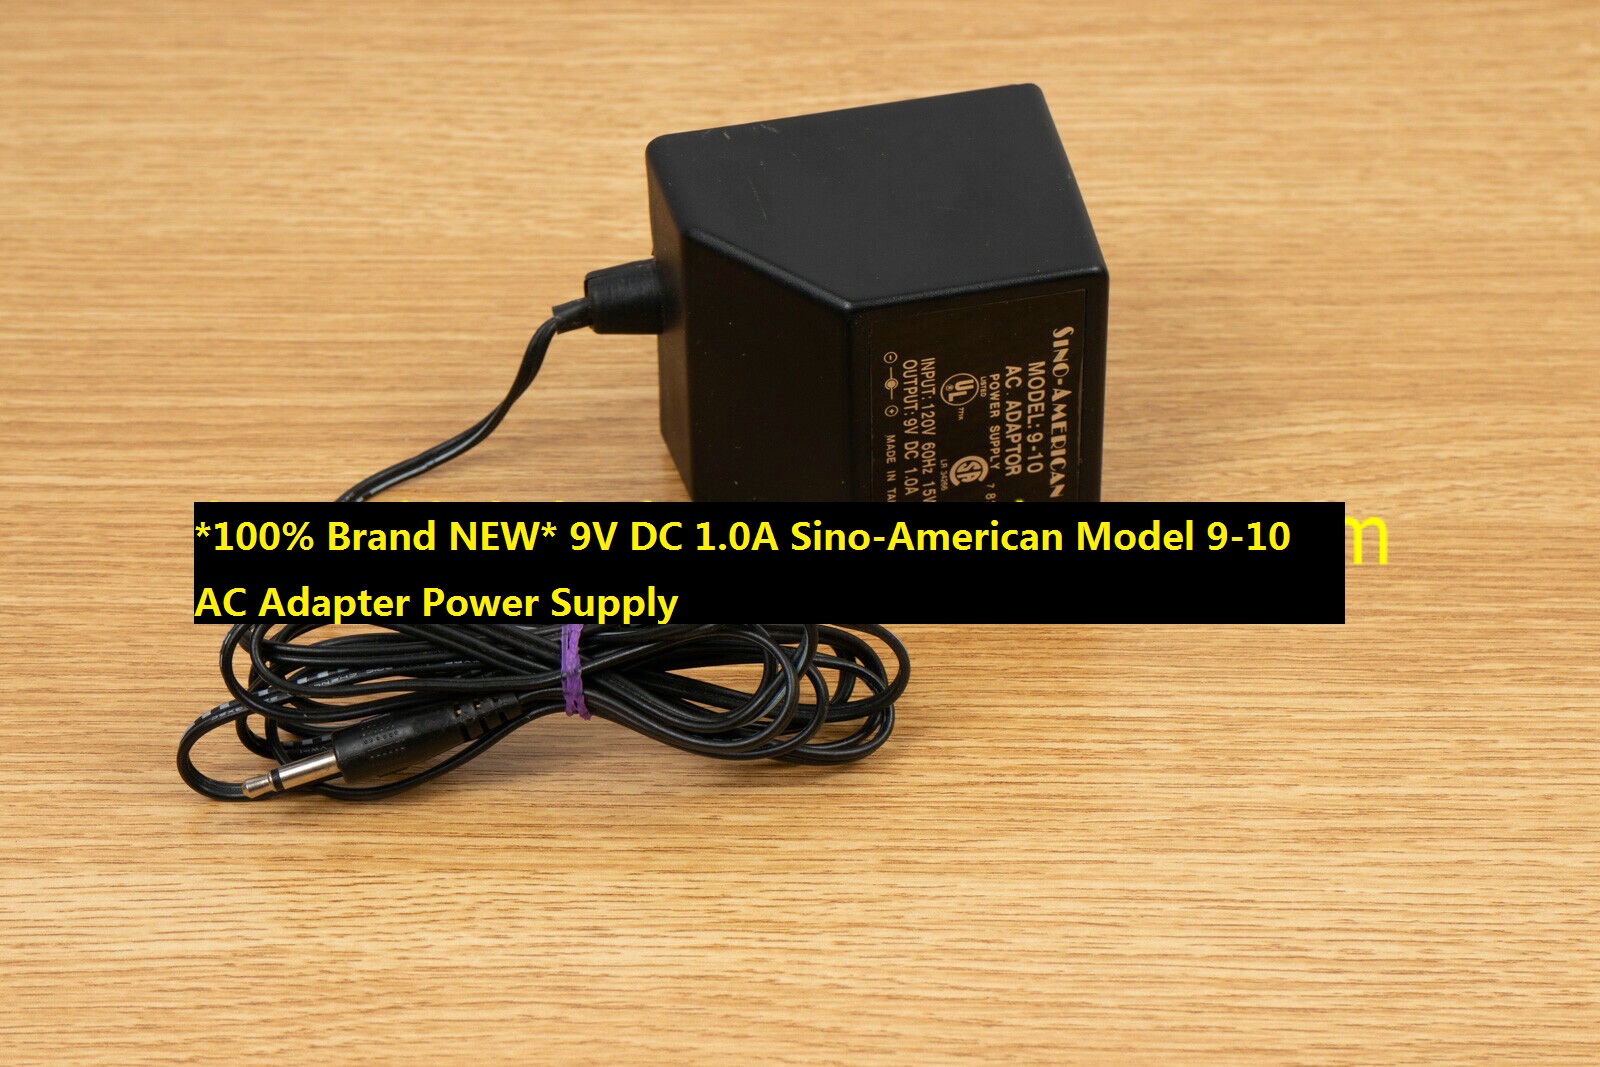 *100% Brand NEW* 9V DC 1.0A Sino-American Model 9-10 AC Adapter Power Supply